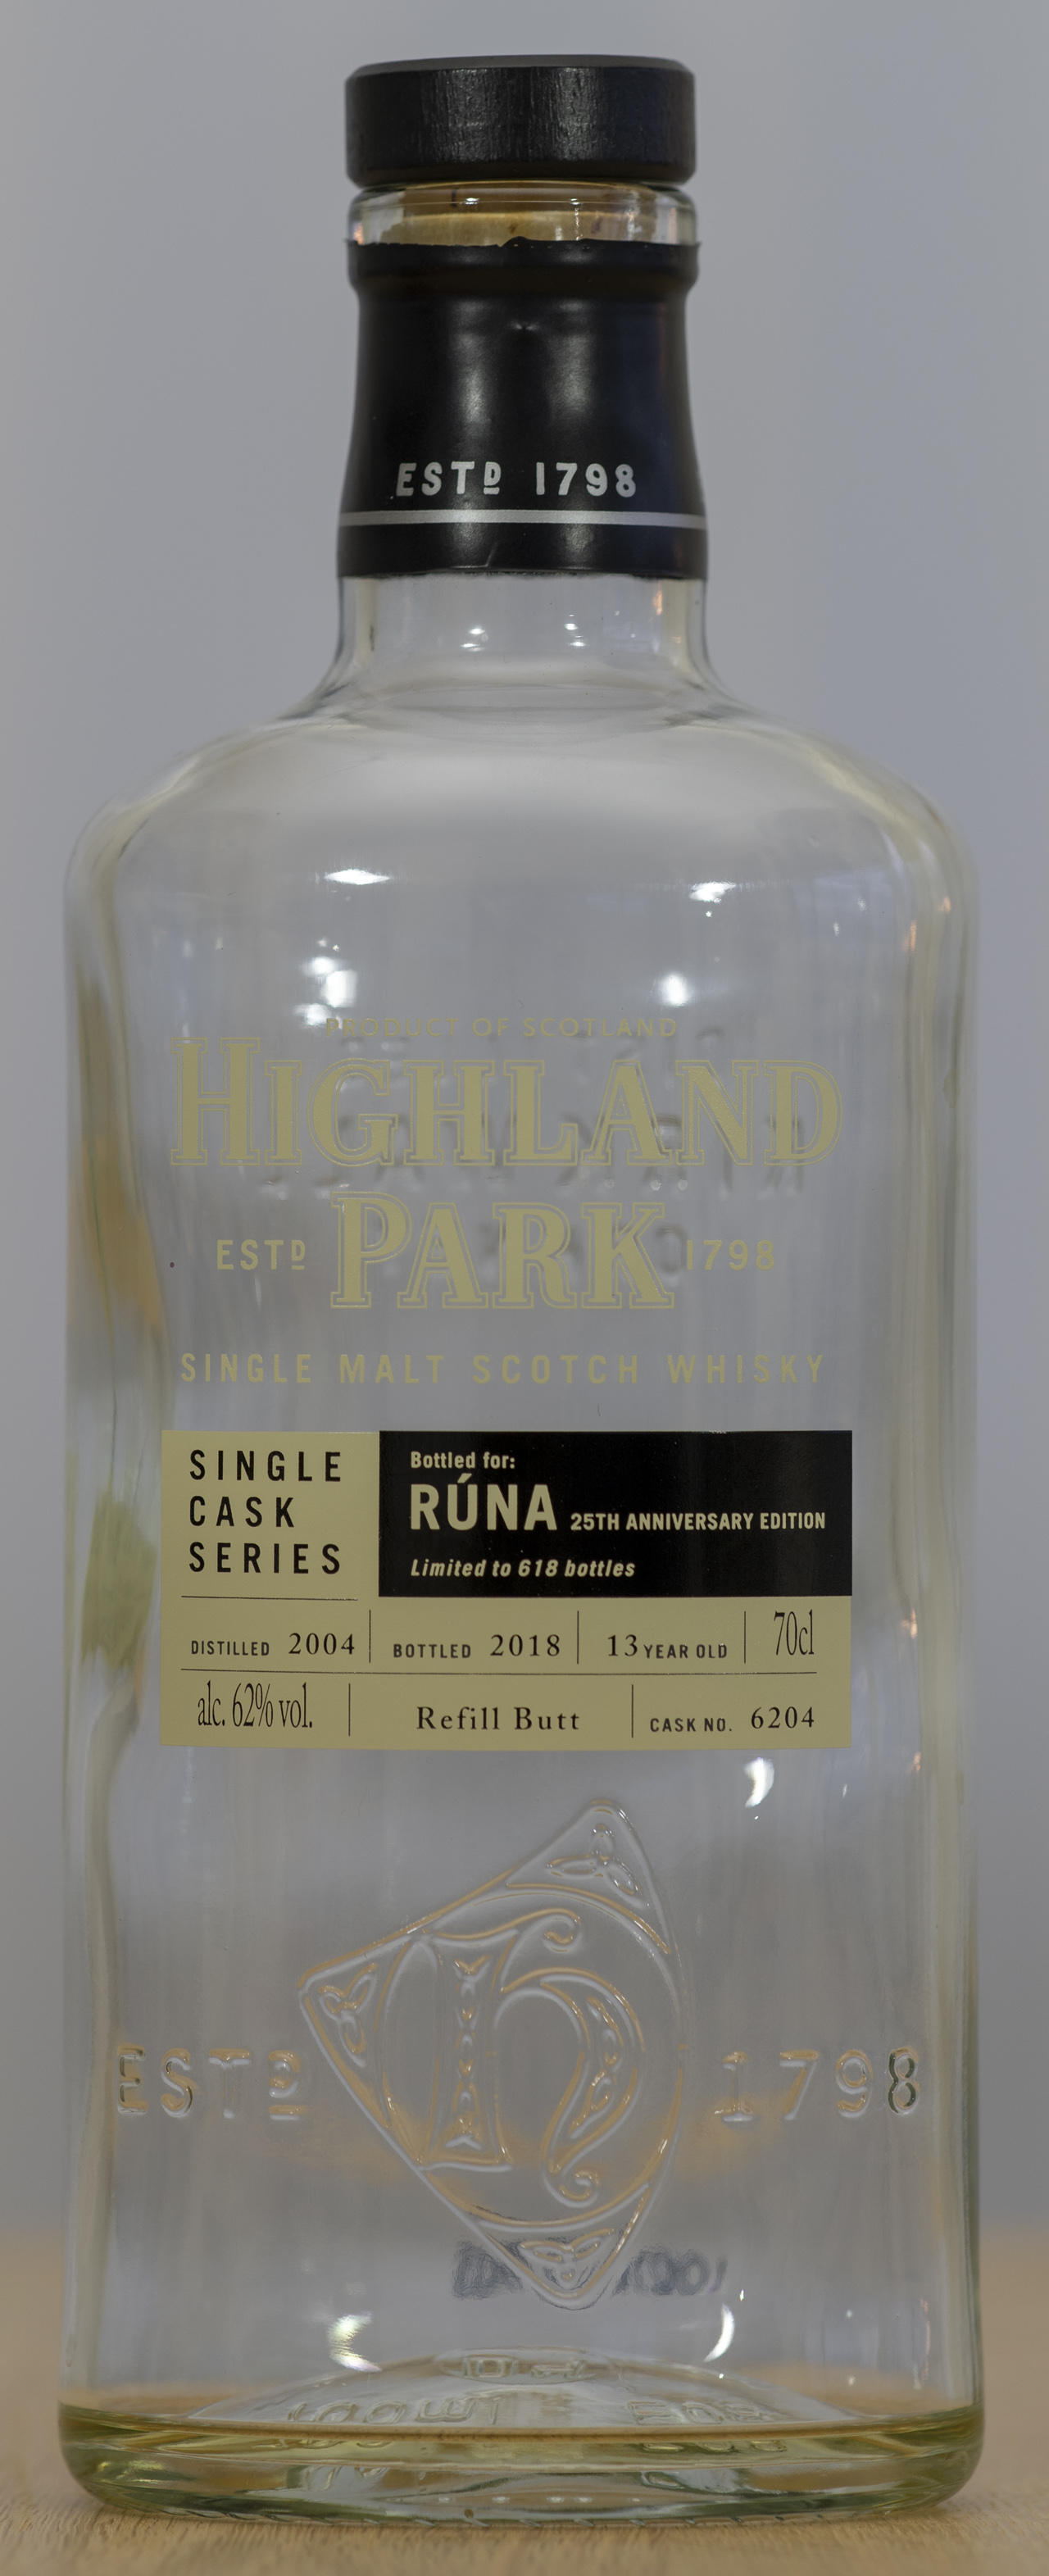 Billede: PHC_1525 - Highland Park Runa - bottle front.jpg